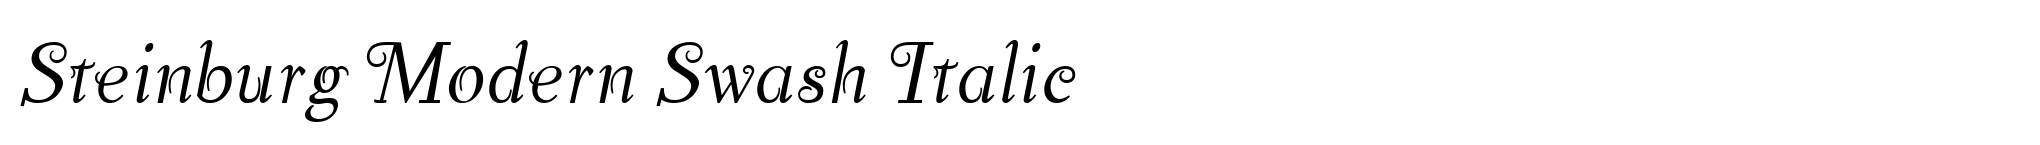 Steinburg Modern Swash Italic image